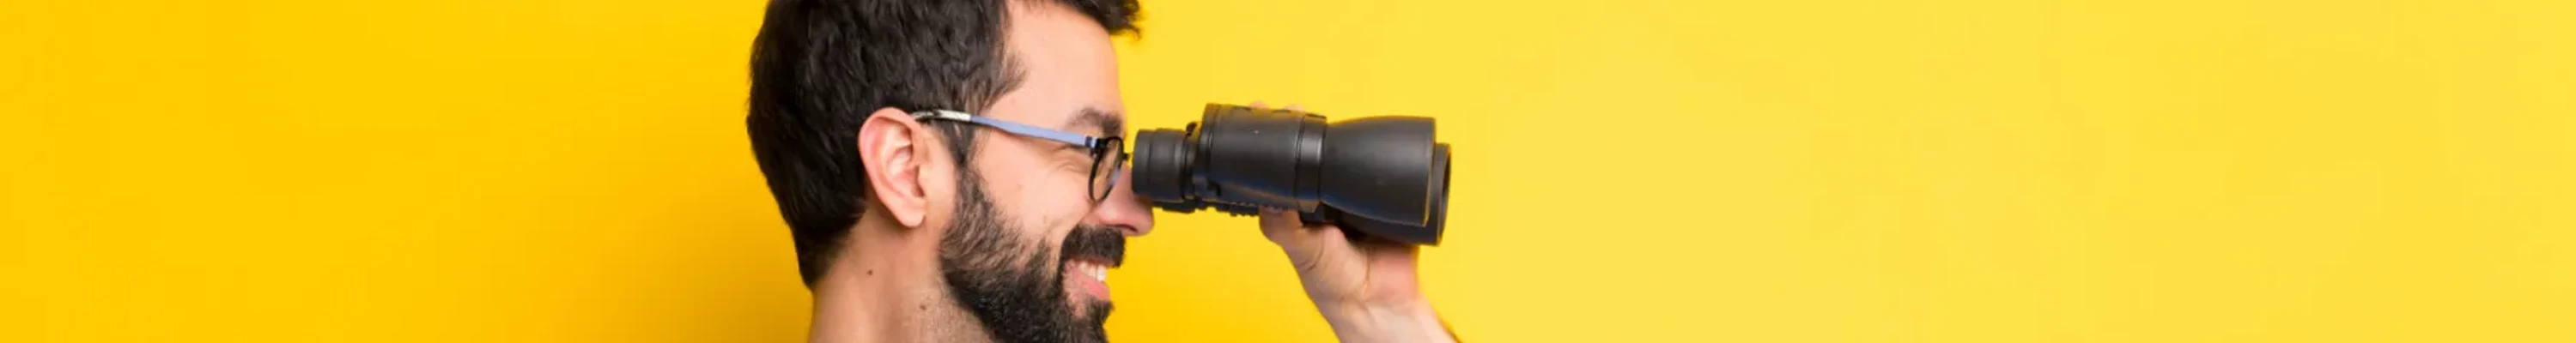 doctor binoculars looking to the side